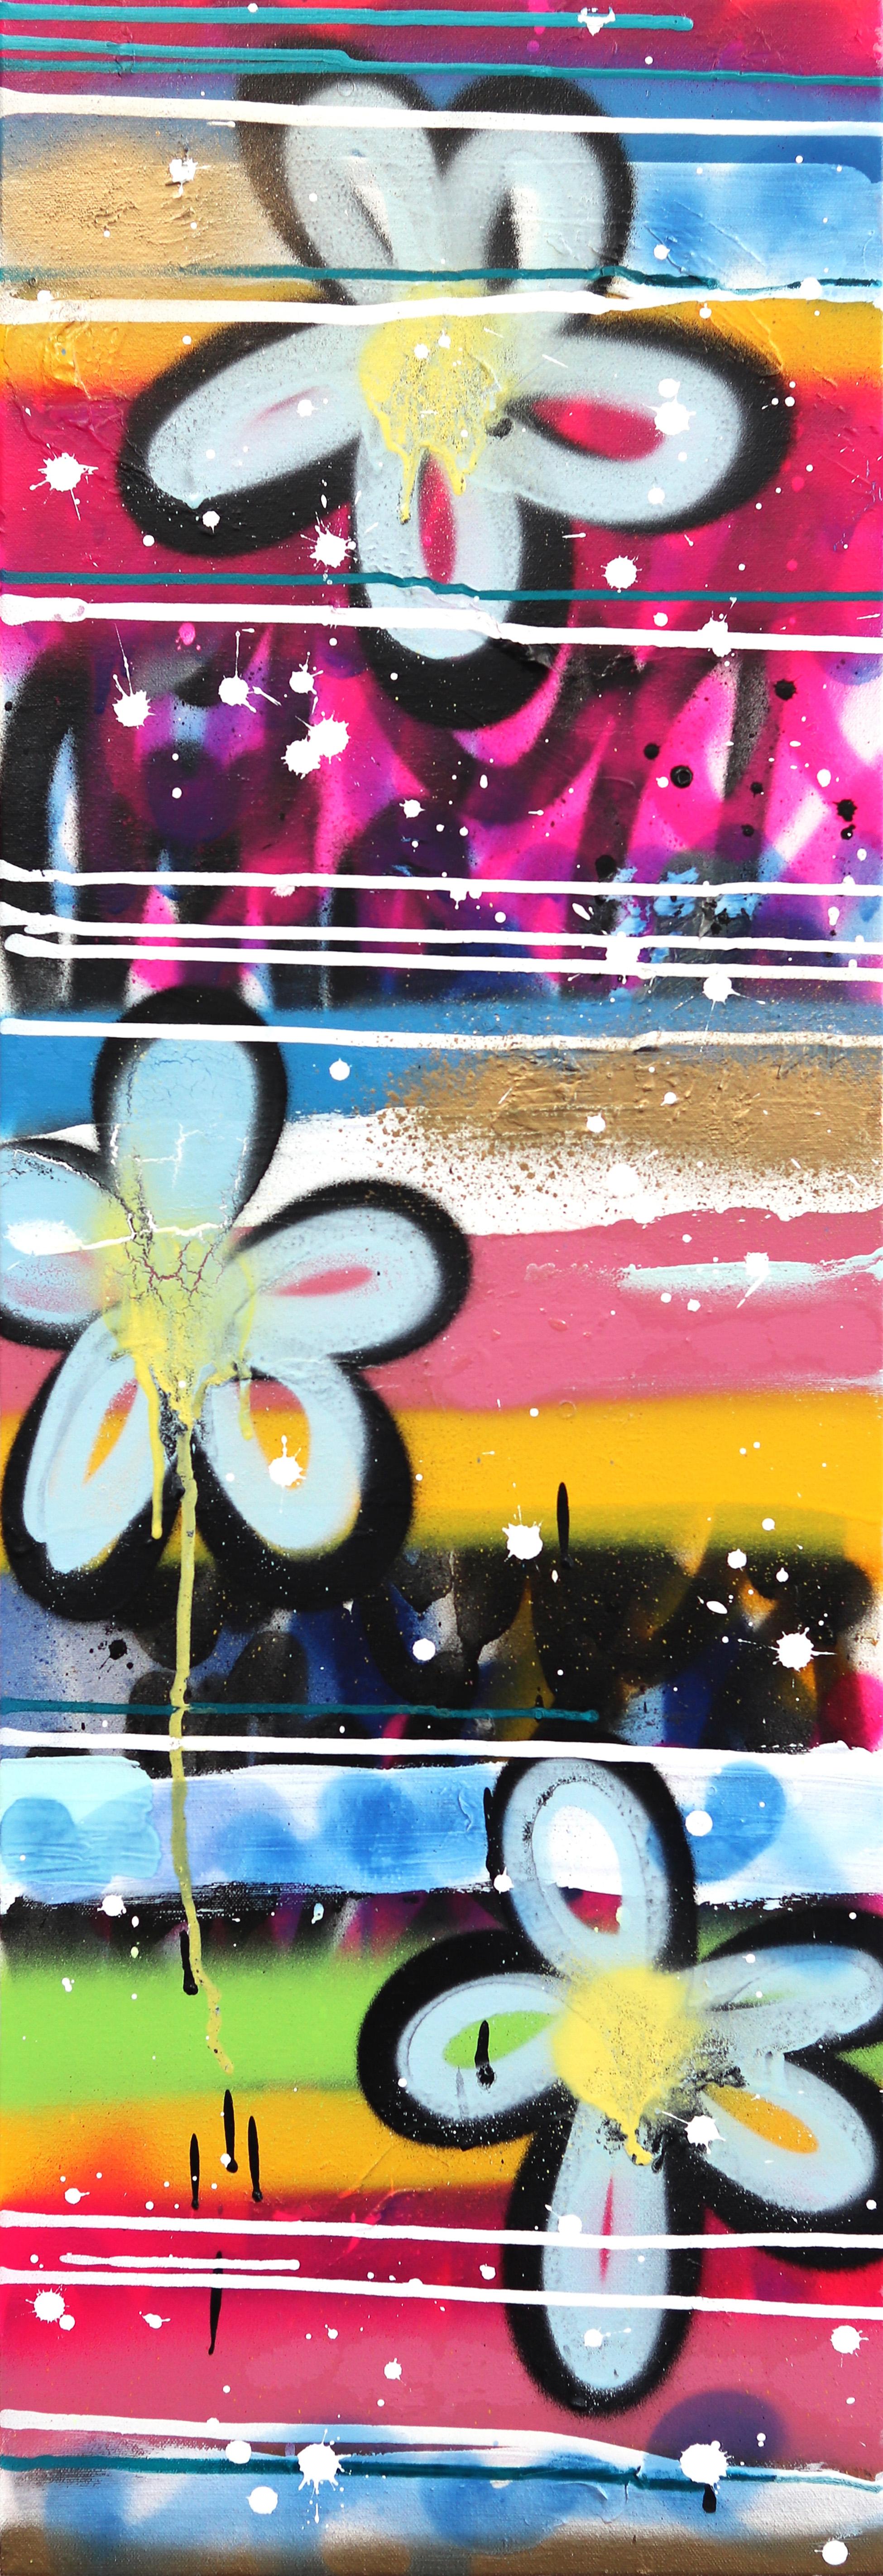 Amber Goldhammer Abstract Painting - Favorite Sunrise Walk - Original Colorful Urban Love Pop Street Art